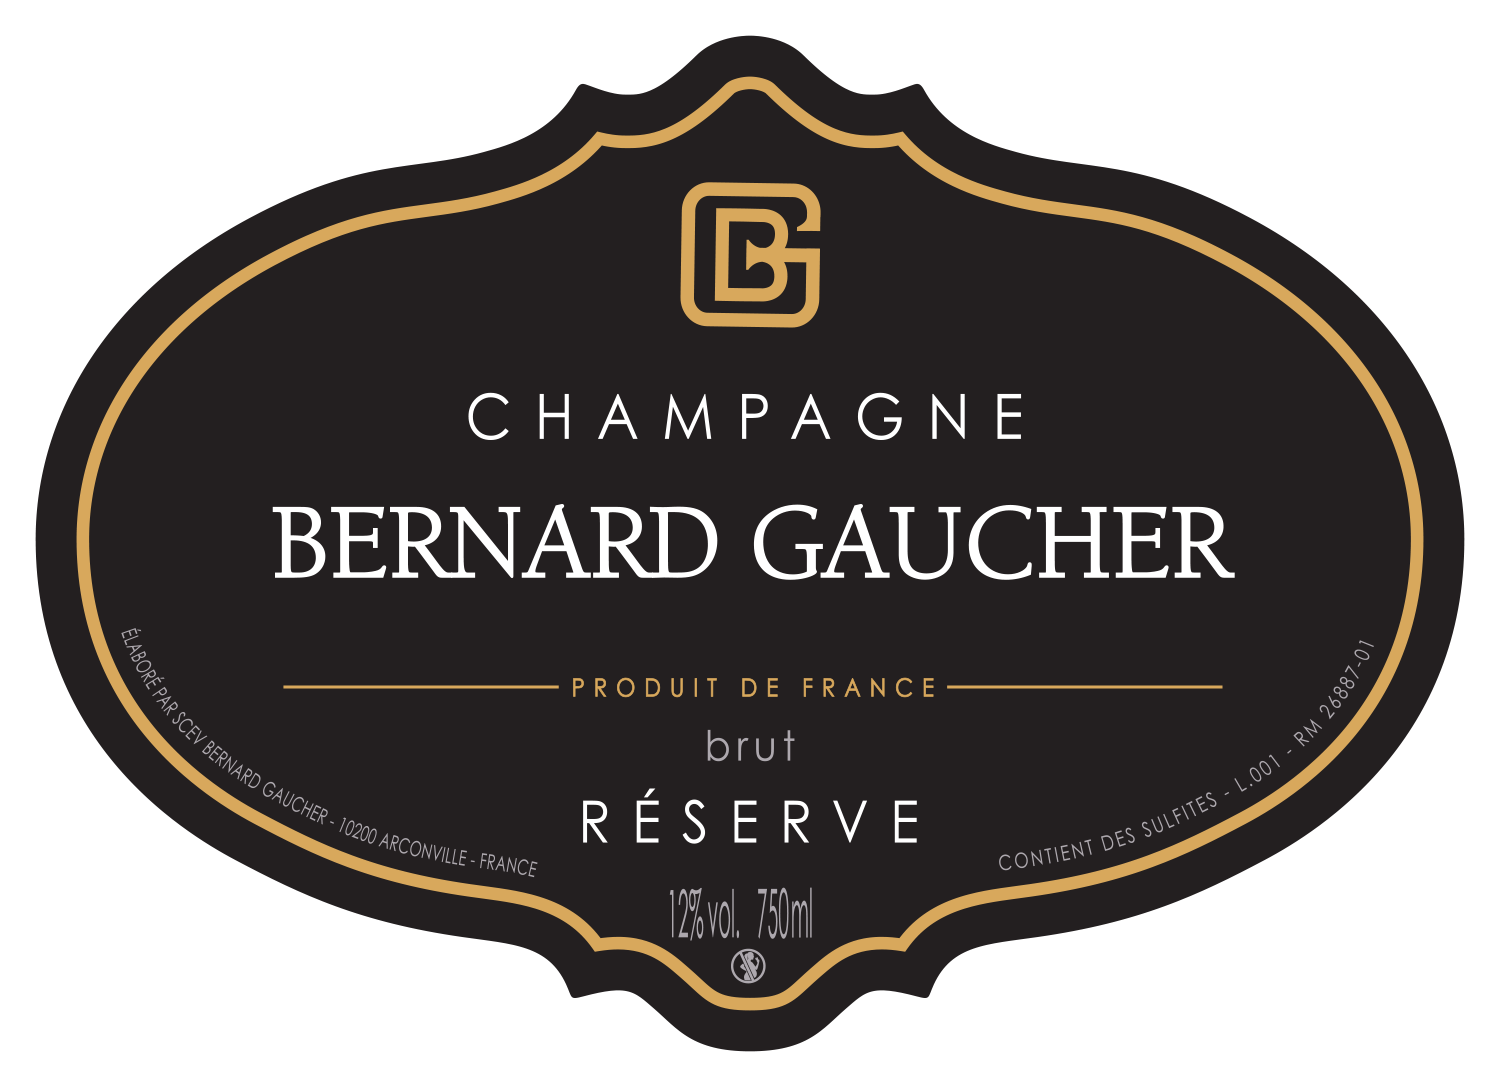 Bernard Gaucher Champagne front label